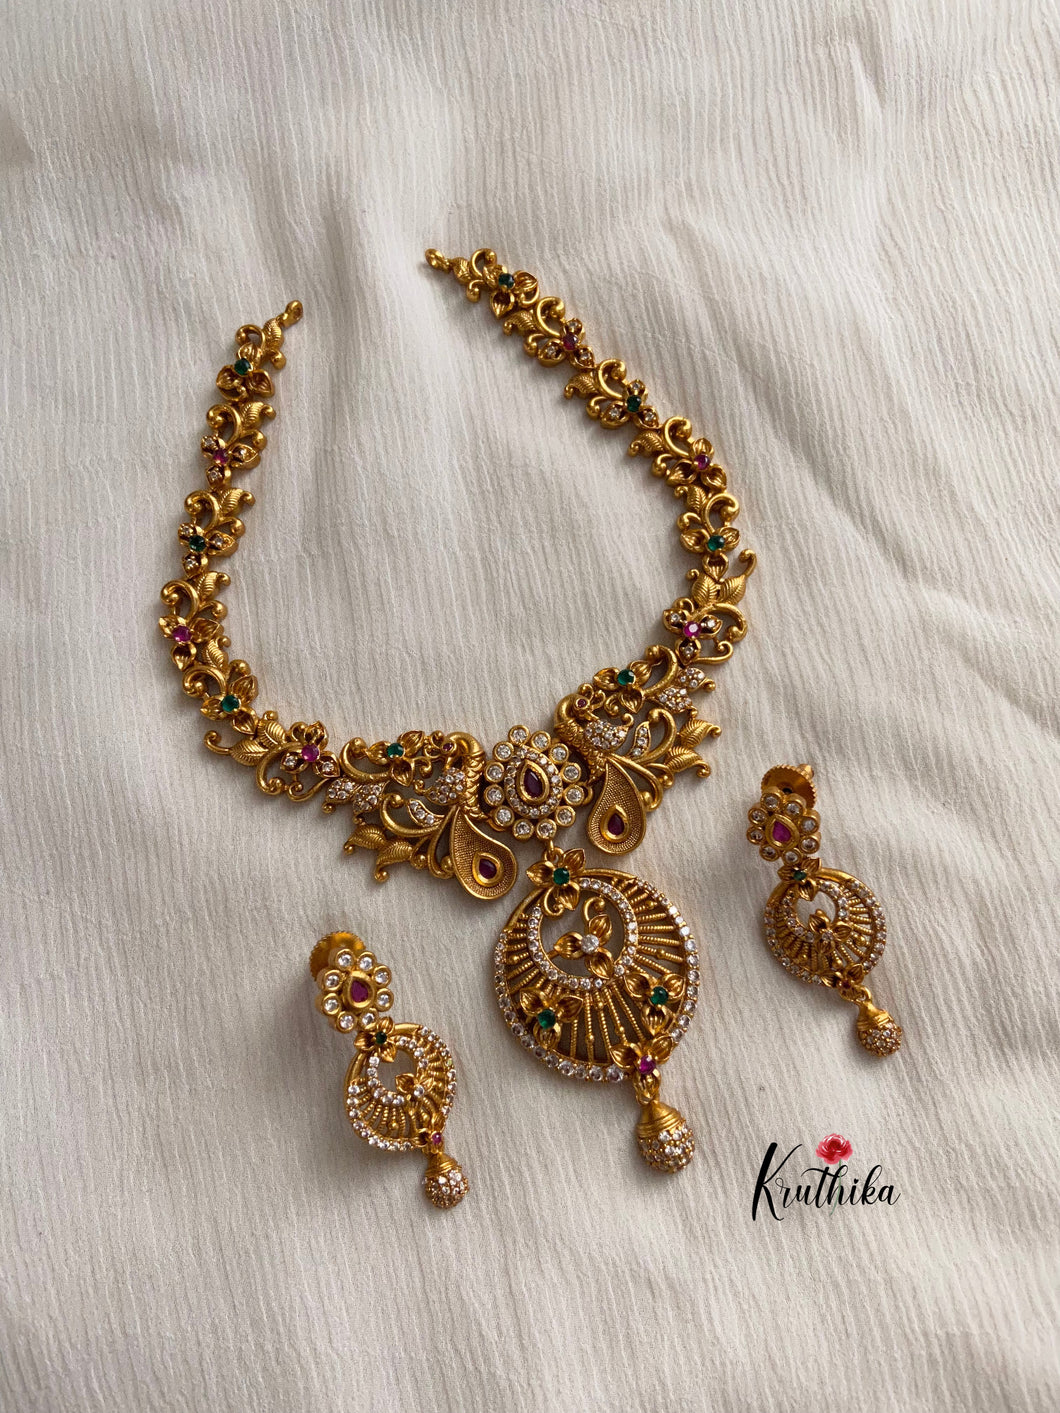 Simple AD necklace Chandbali pendant NC473